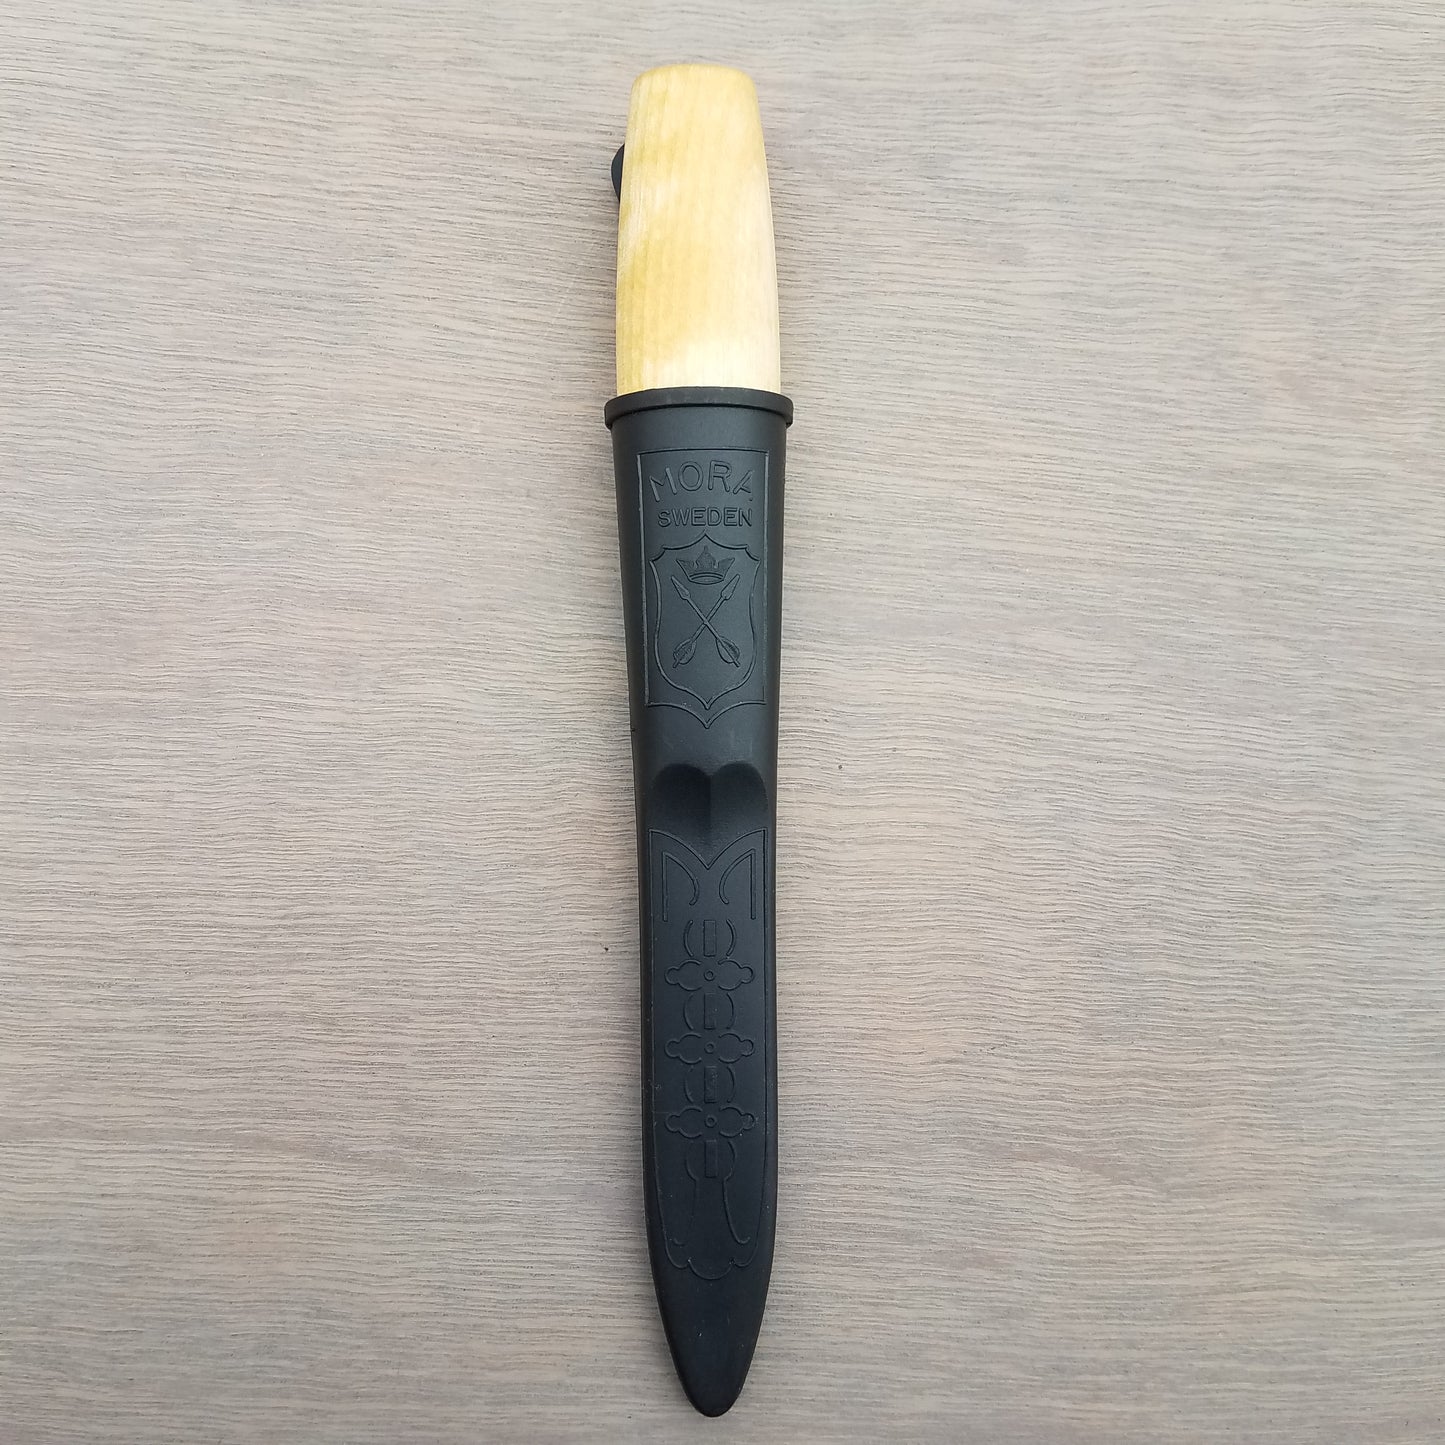 Morakniv Wood Carving Knife 120 (C)